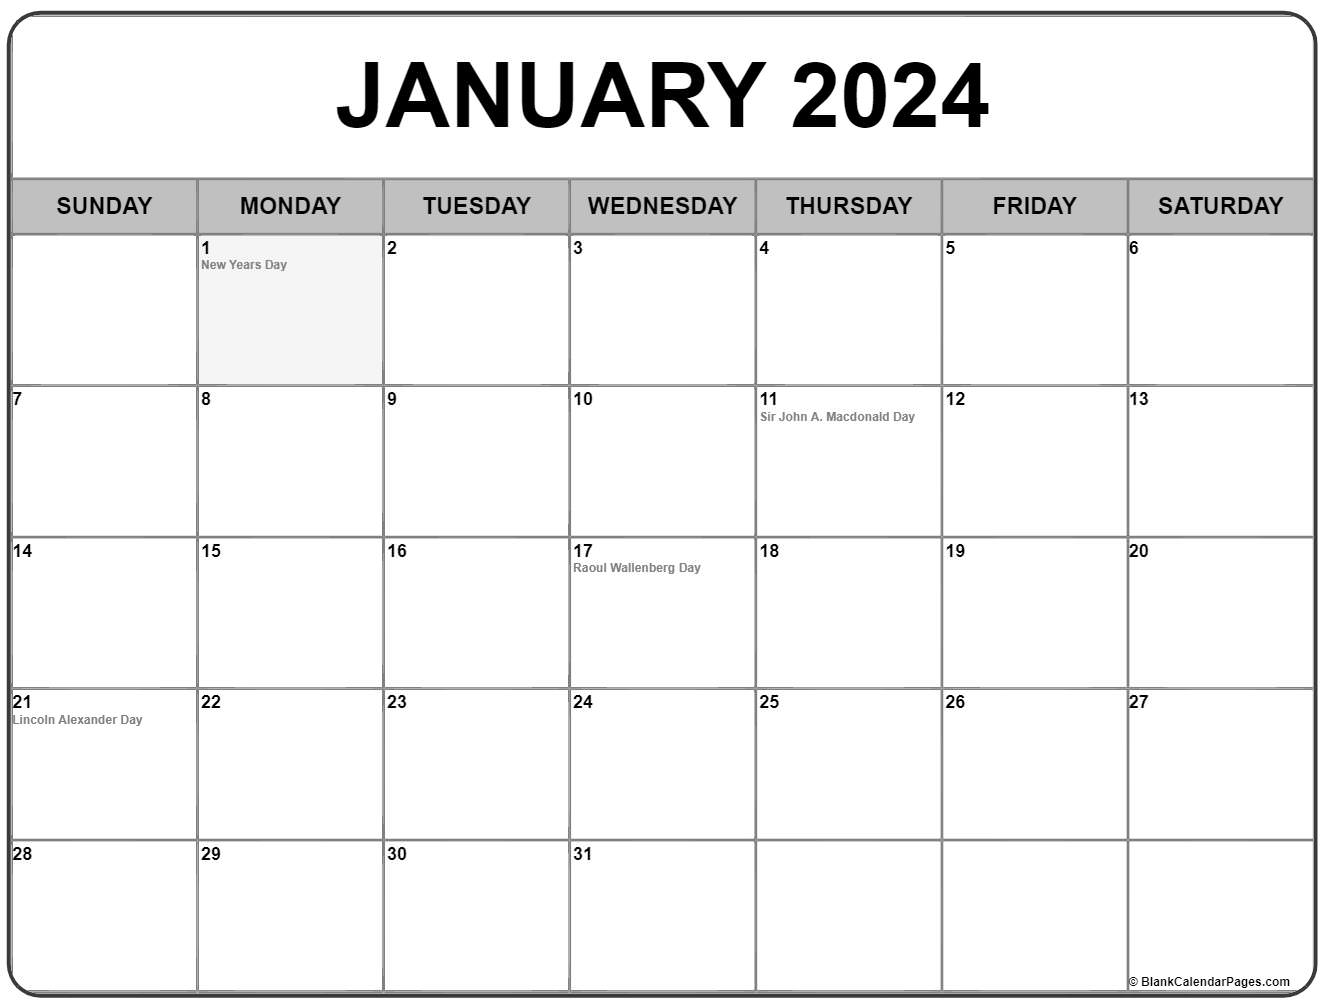 jan-2024-calendar-hot-sex-picture